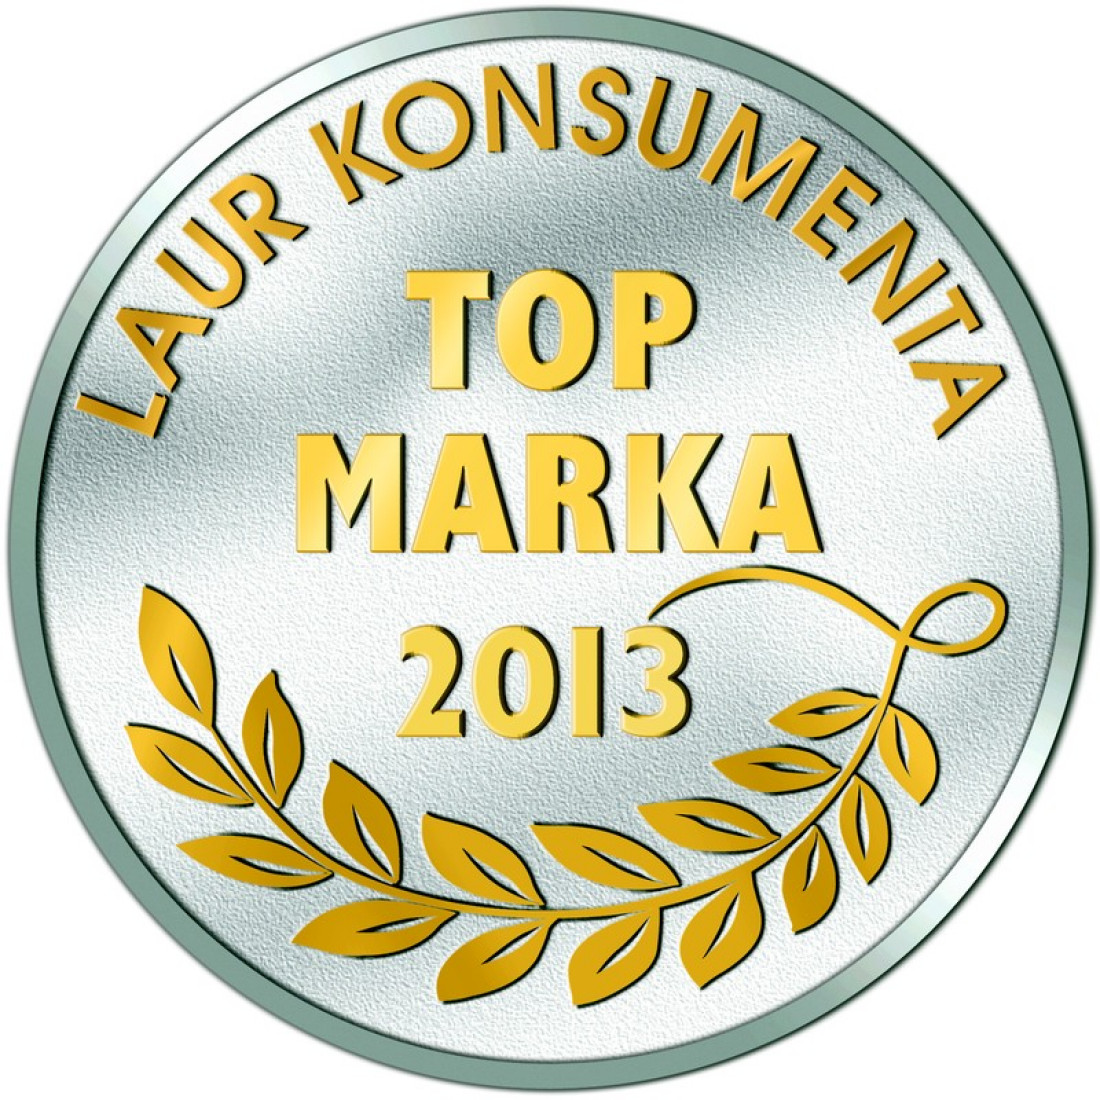 LAUR KONSUMENTA - TOP MARKA 2013 dla Elektry